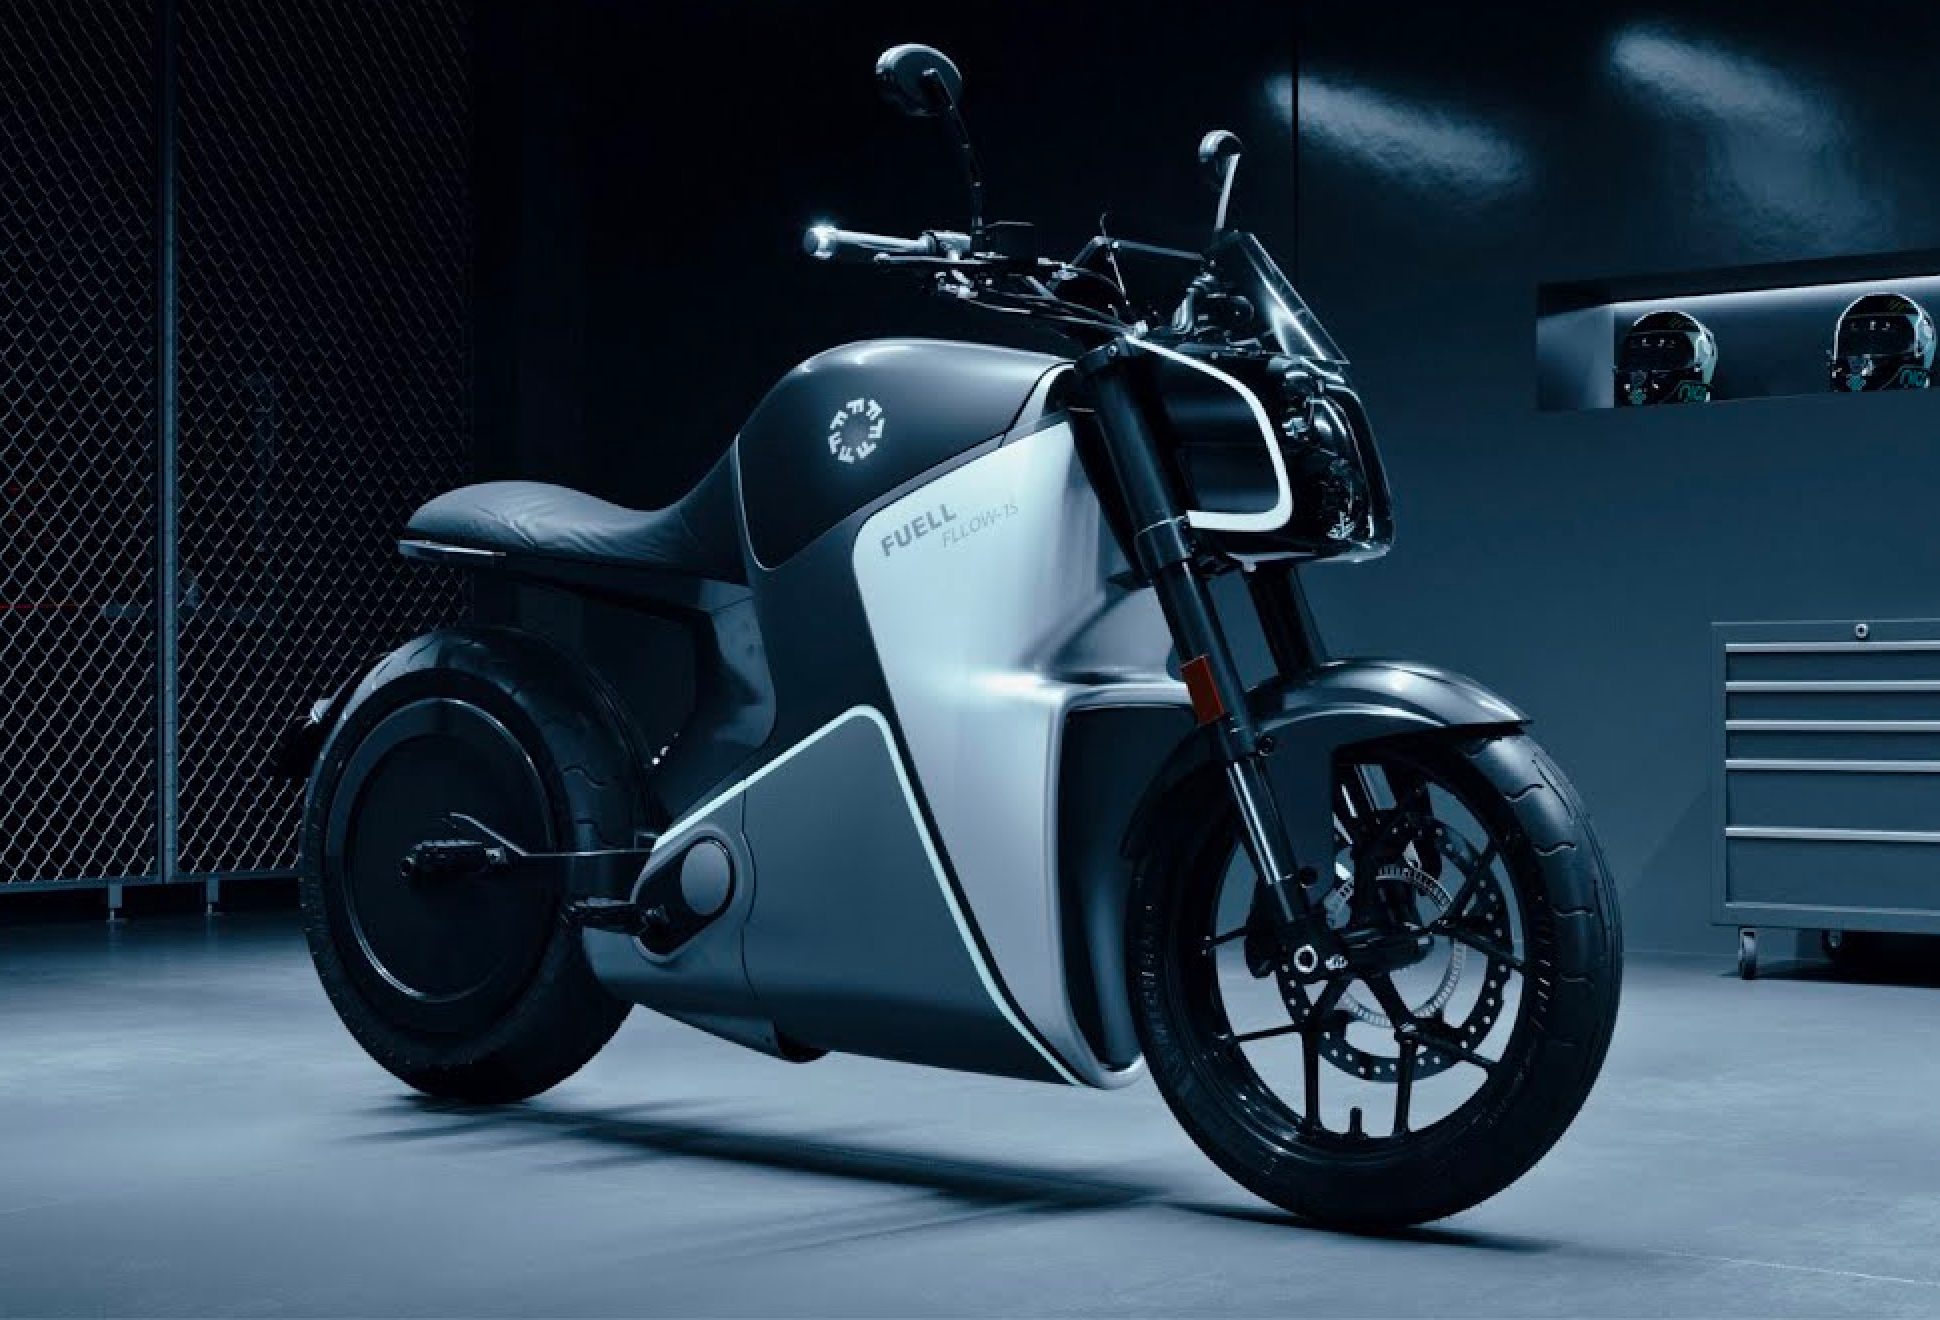 Fuell Fllow E-motorcycle: A Moto Elétrica Do Futuro - Image